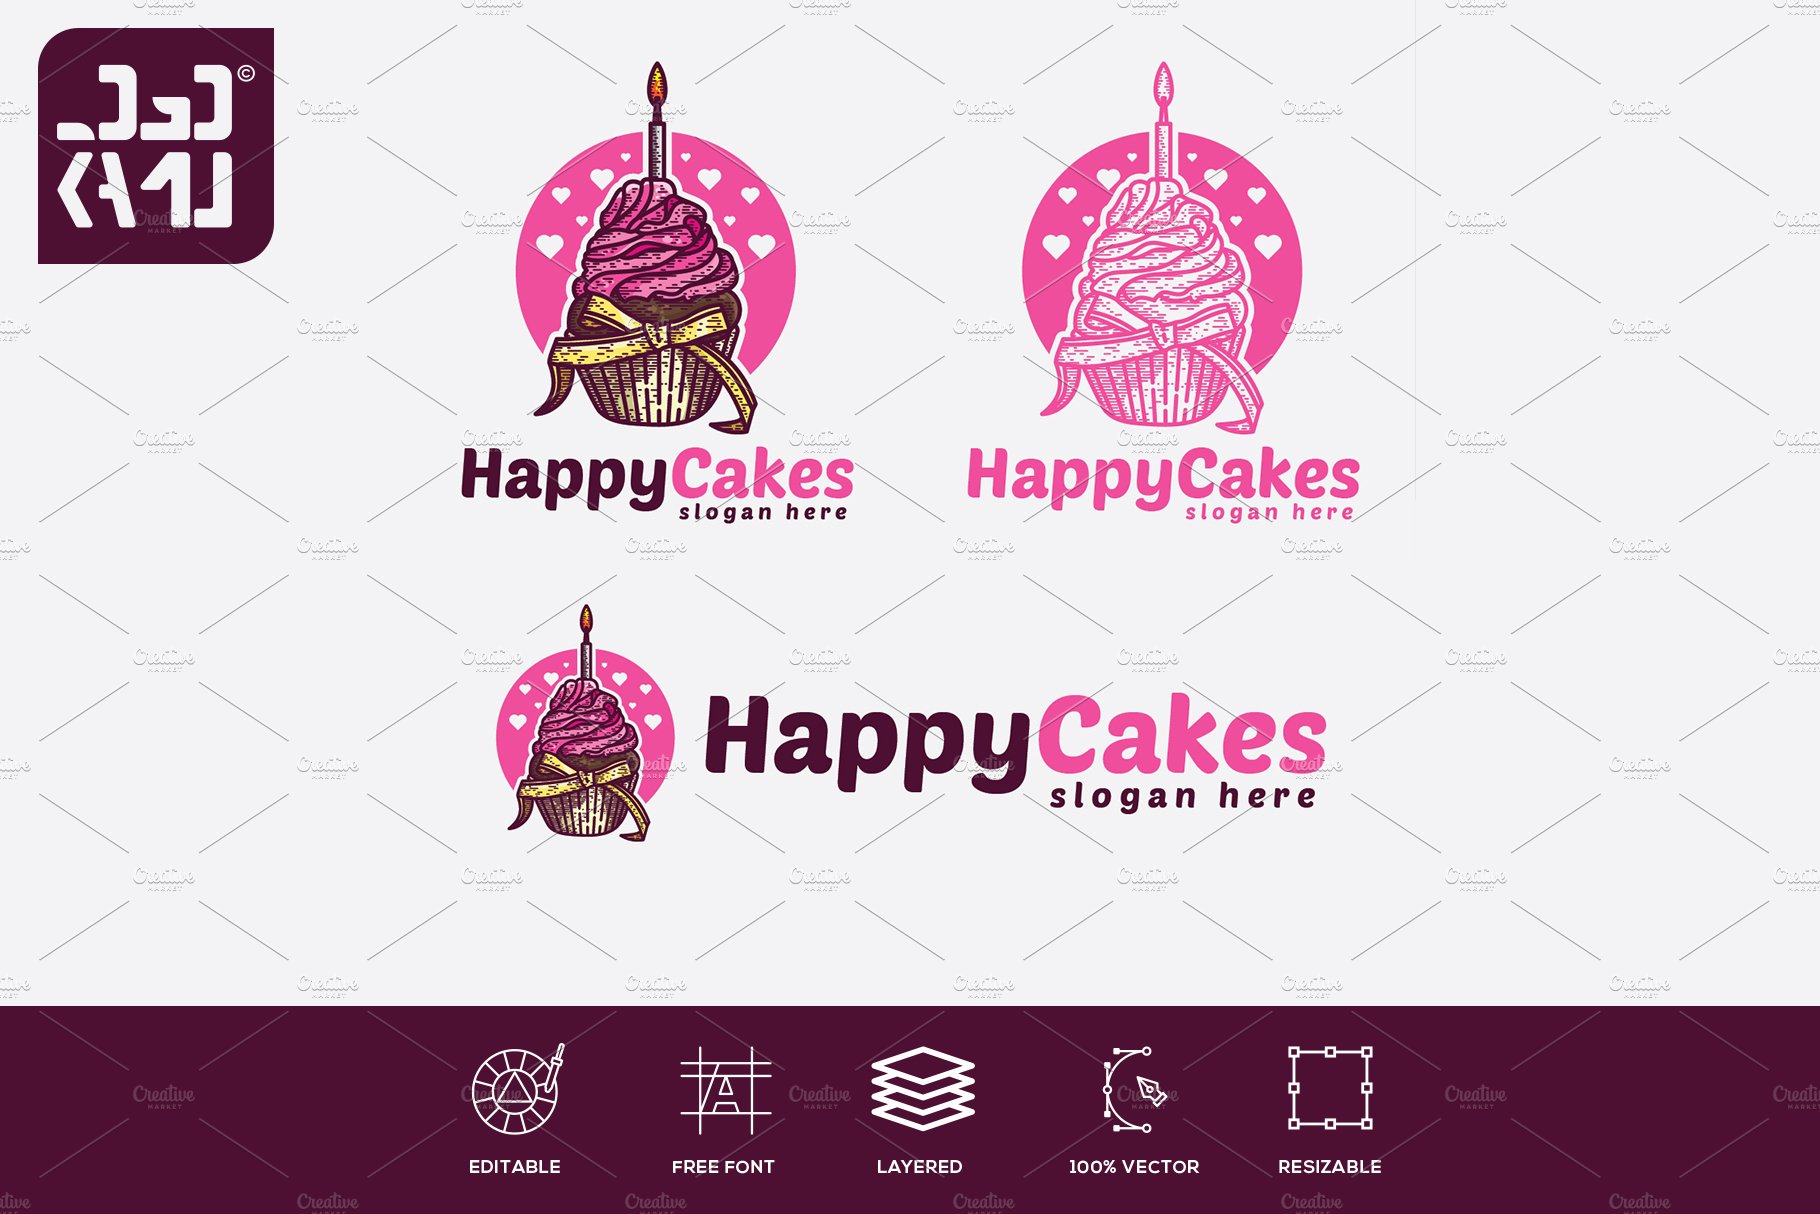 Cake Vectors & Illustrations for Free Download | Freepik